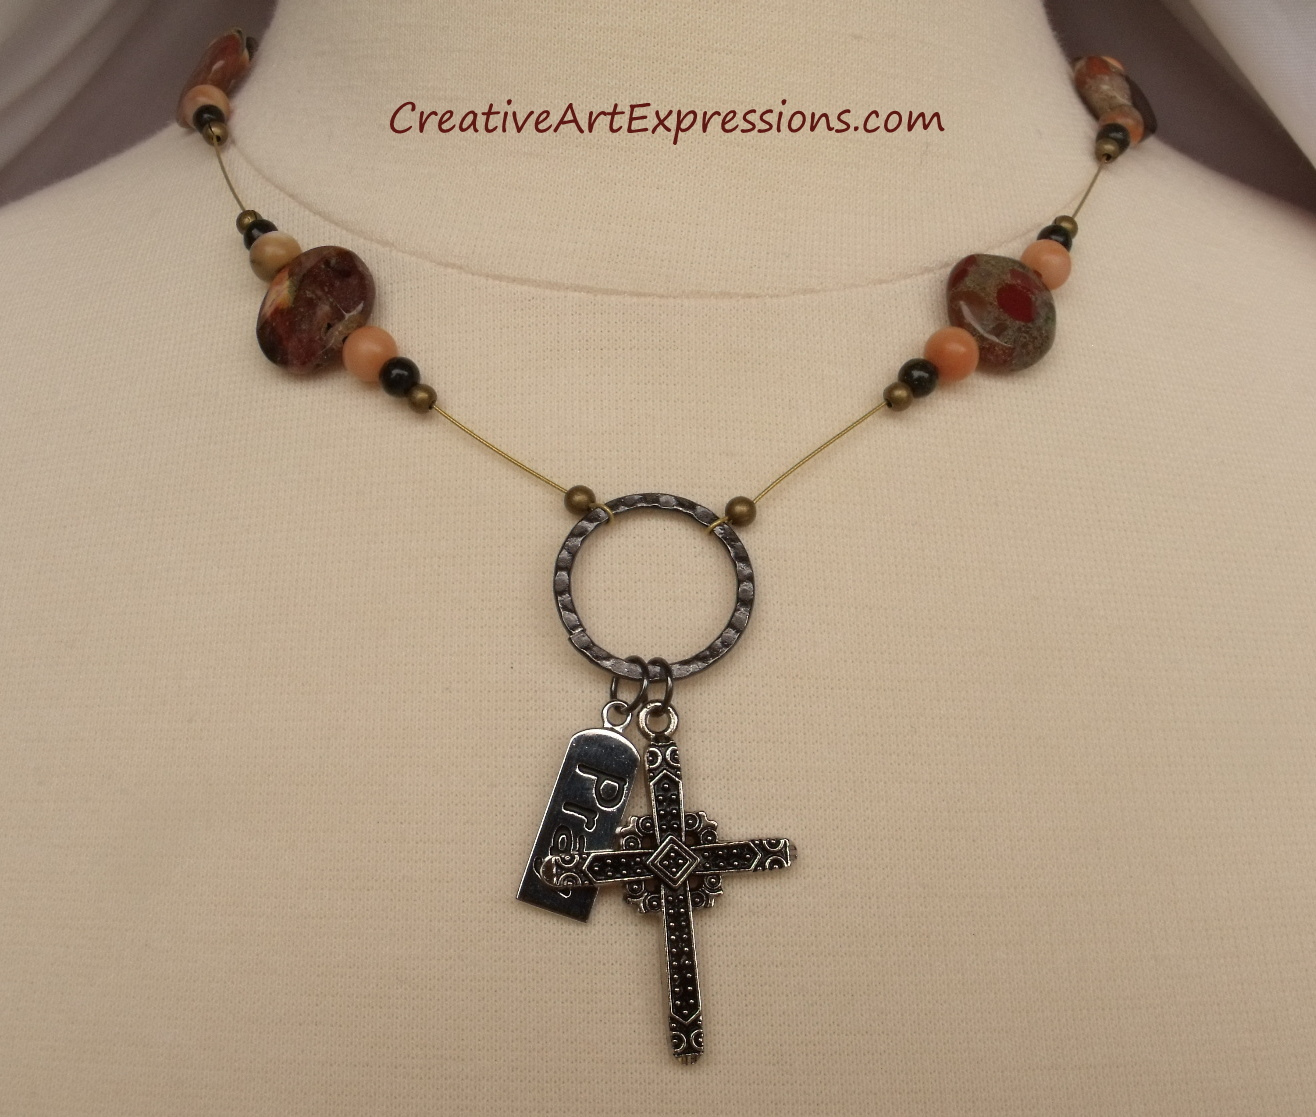 Creative Art Expressions Handmade Chalcedony Prayer Beads Necklace Jewelry Design